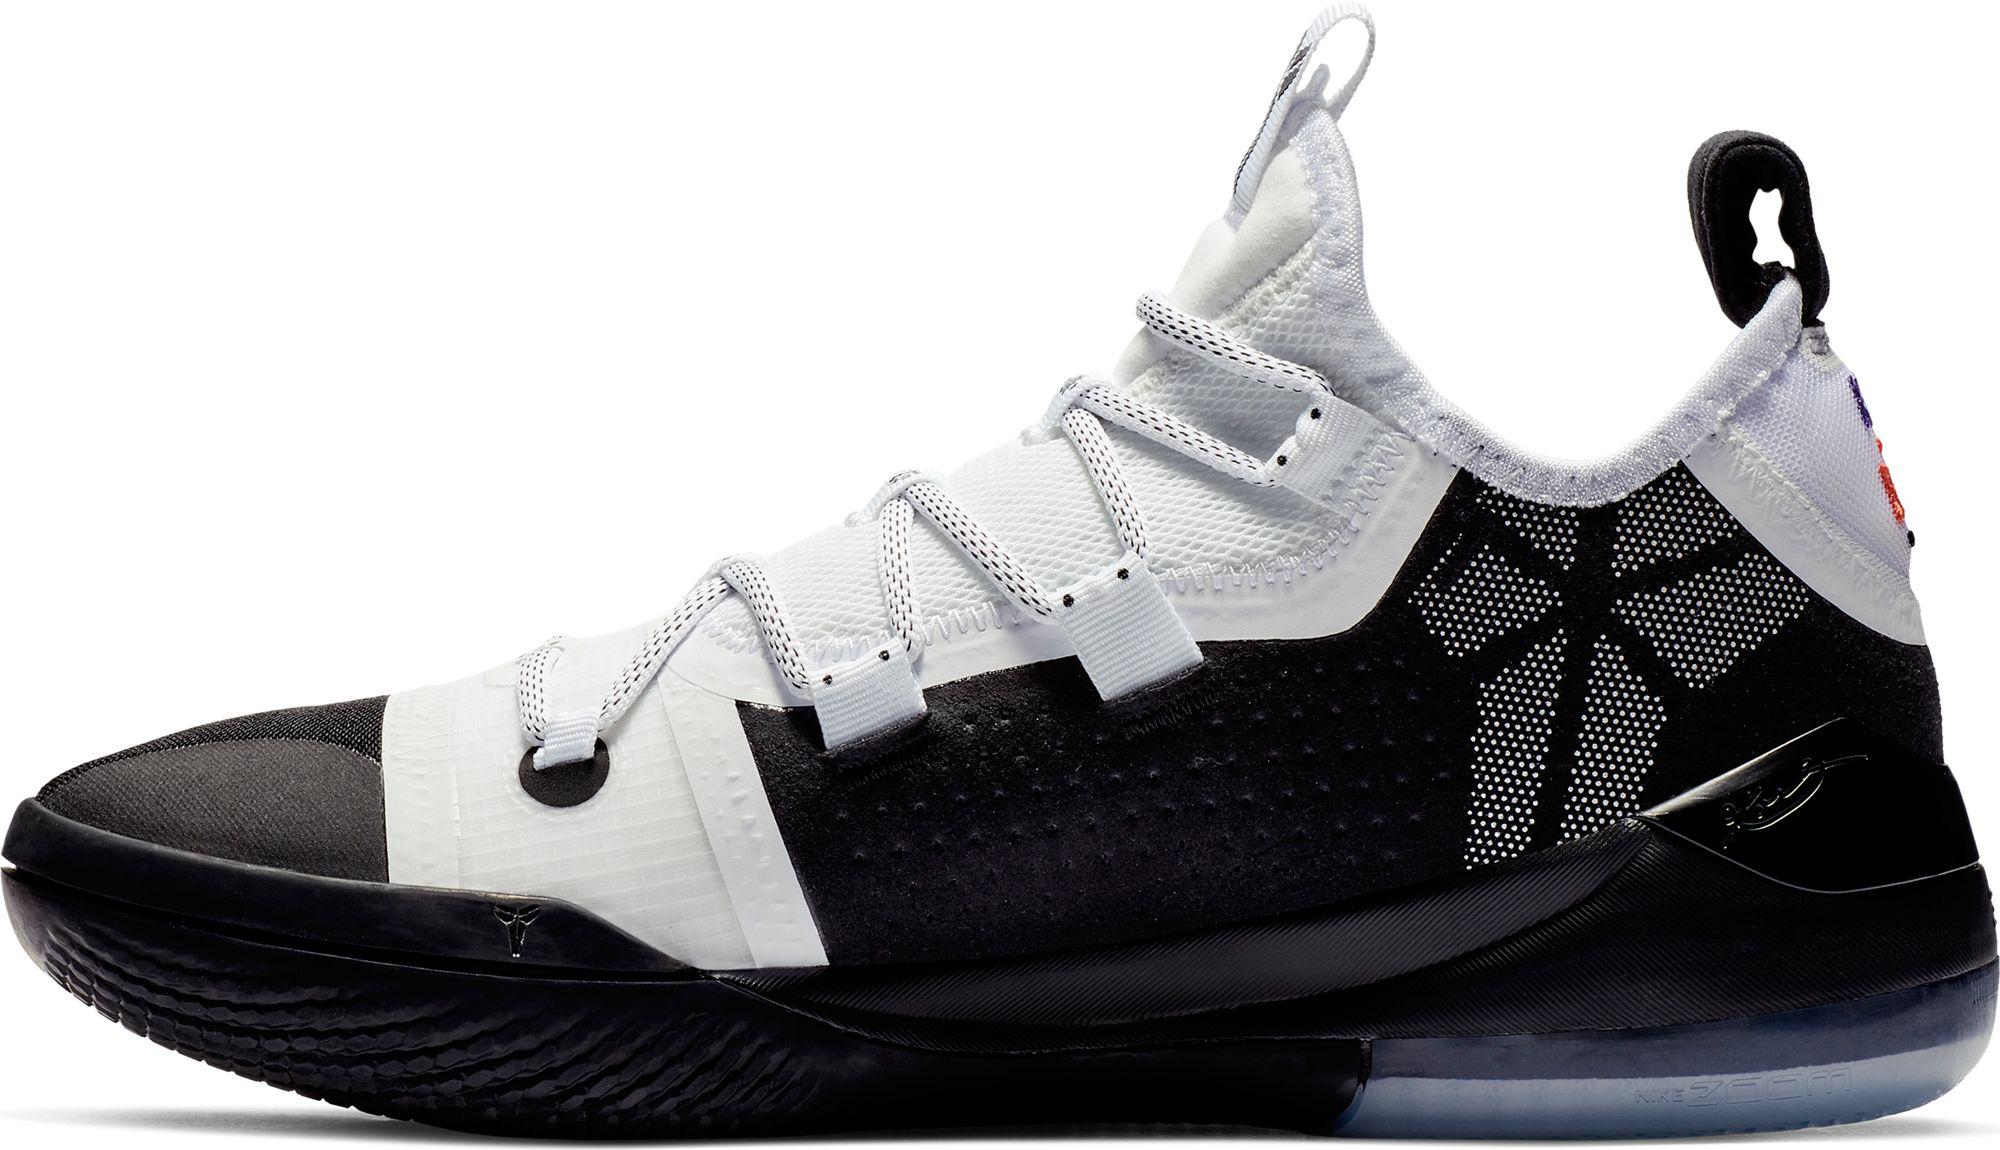 Nike Kobe A.d. Tb Basketball Shoes in White/Black (White) for Men - Lyst